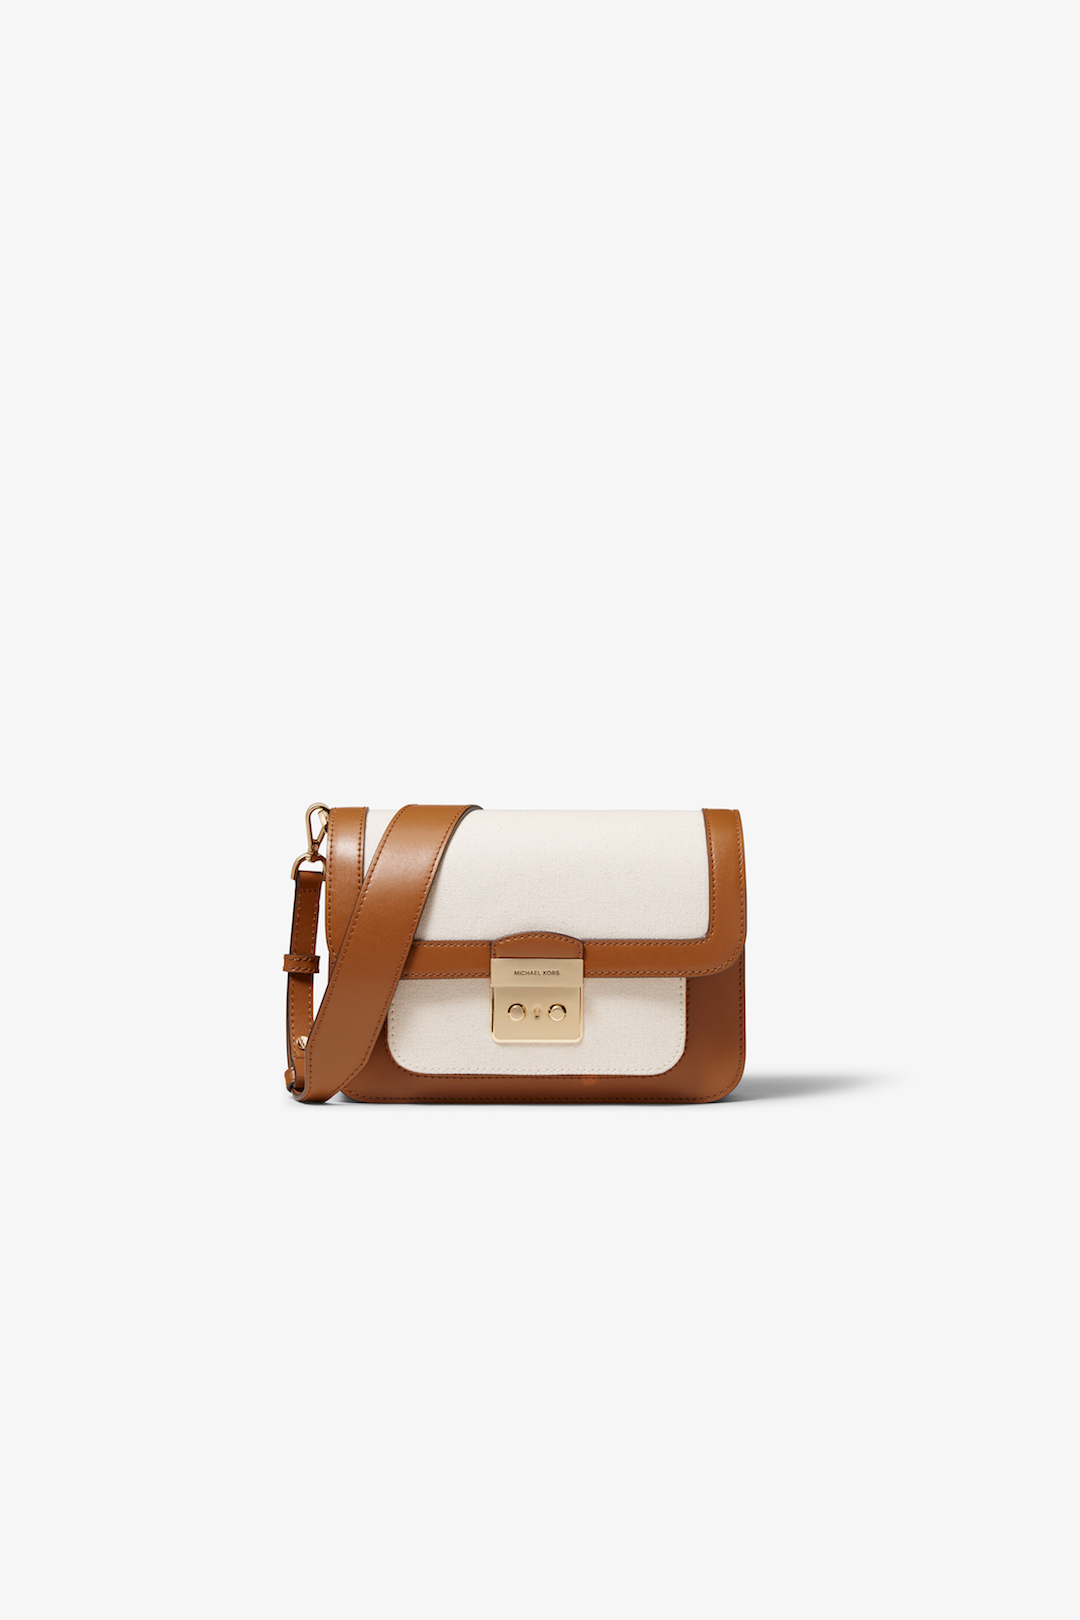 MICHAEL Michael Kors Canvas Leather Sloan Editor Shoulder Bag.jpg